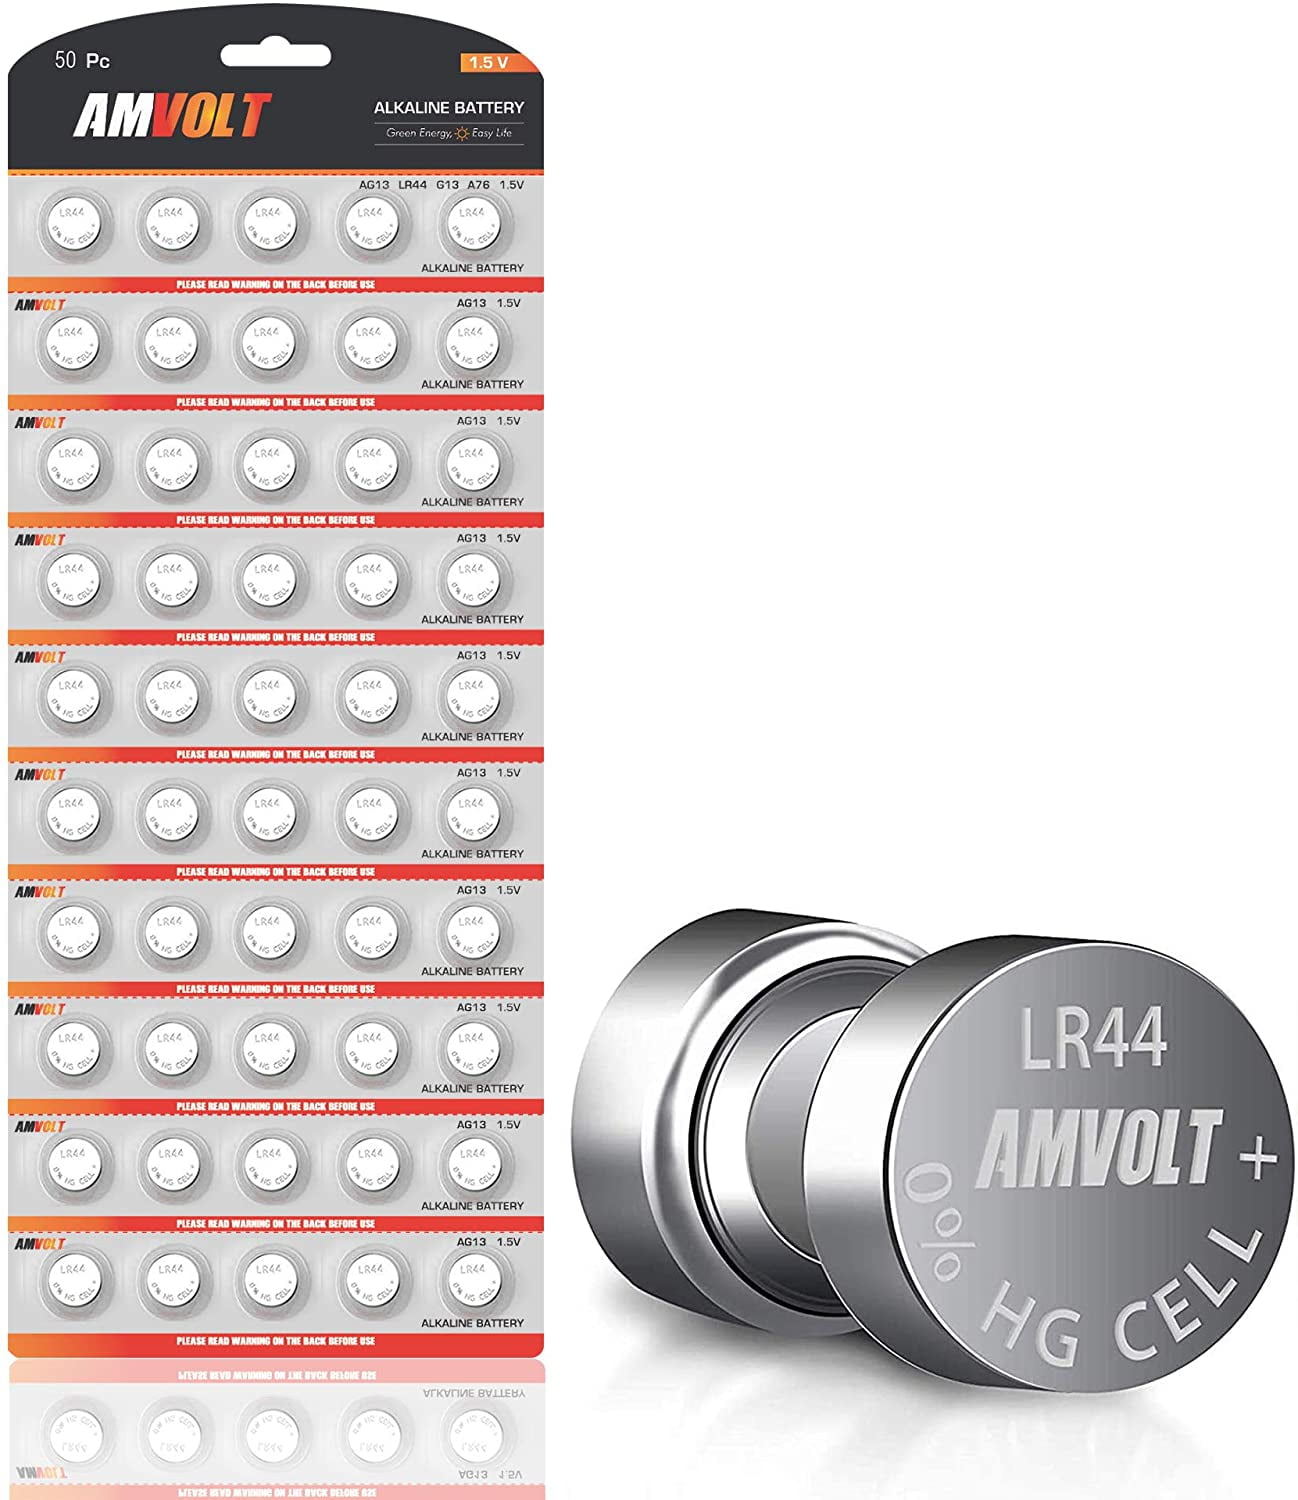 Energizer LR44 1.5V Button Cell Battery 20 pack (Replaces: LR44, CR44,  SR44, 357, SR44W, AG13, G13, A76, A-76, PX76, 675, 1166a, LR44H, V13GA,  GP76A